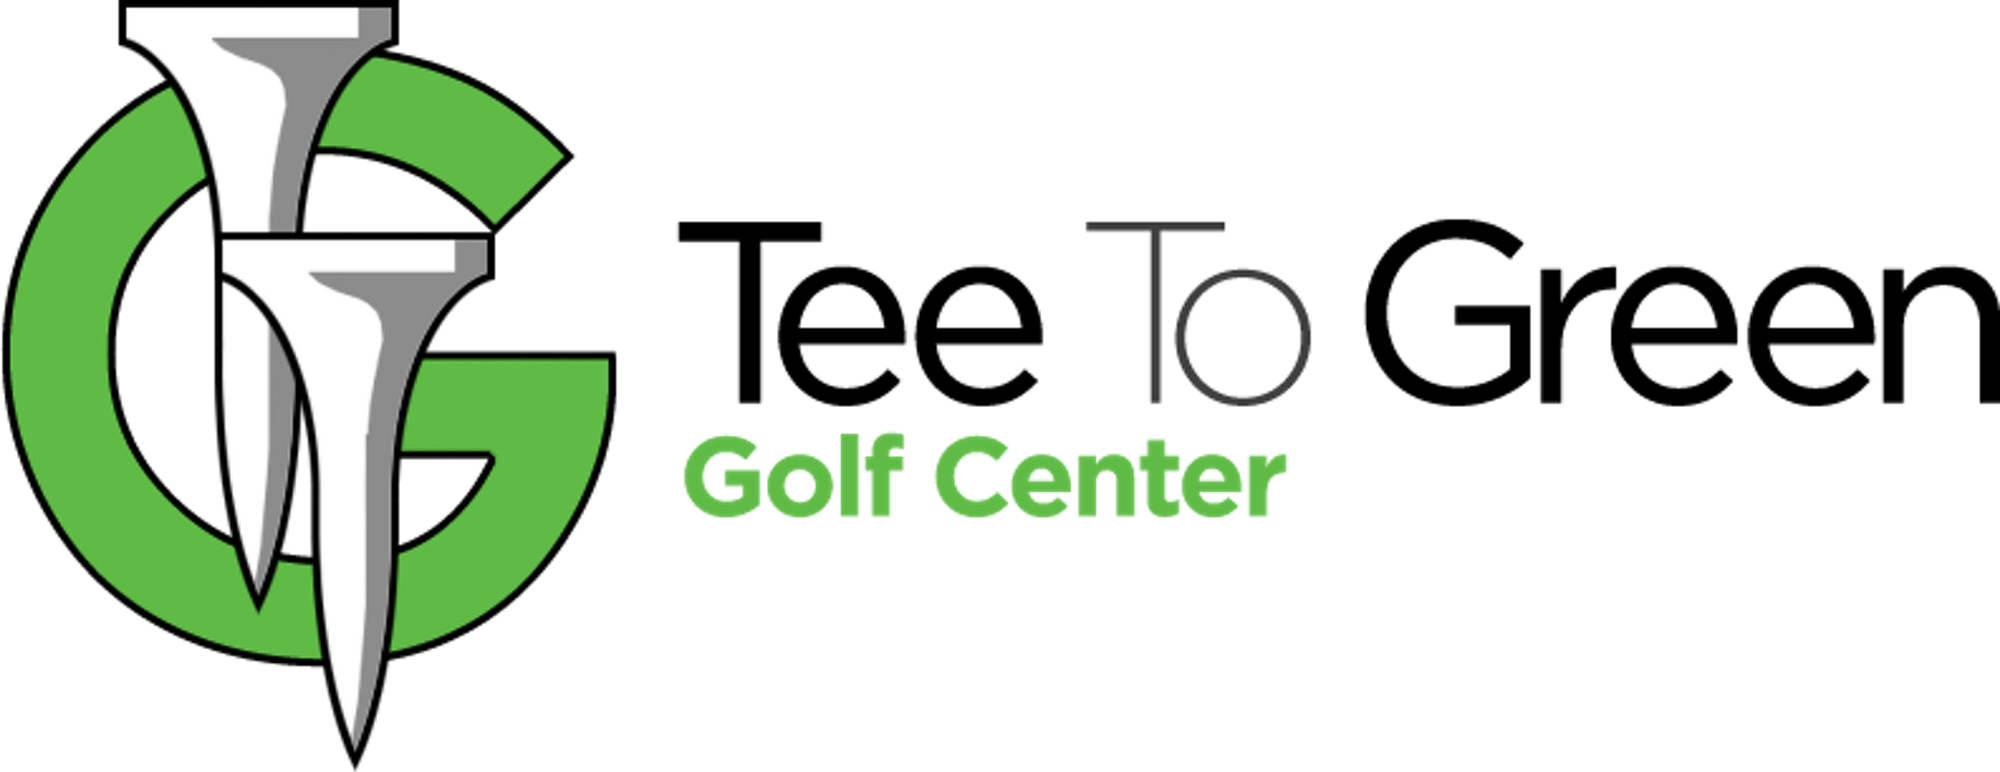 Tee To Green Golf Center